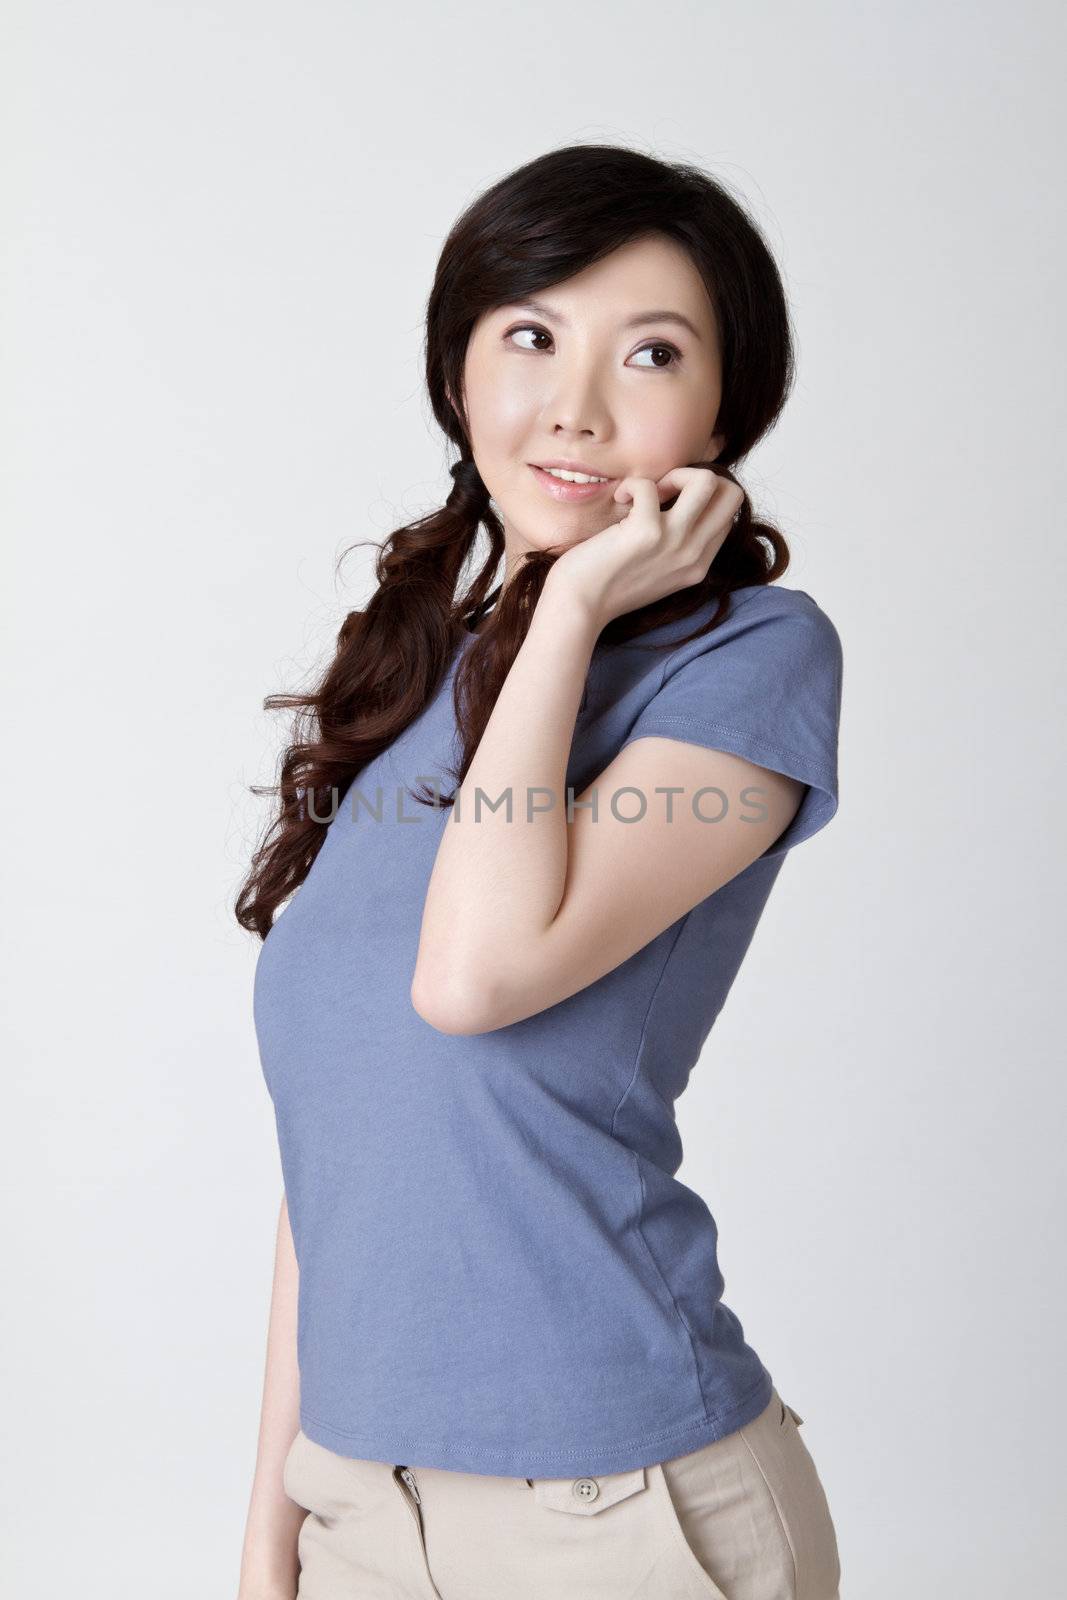 Cute Asian beauty, closeup portrait on gray background.